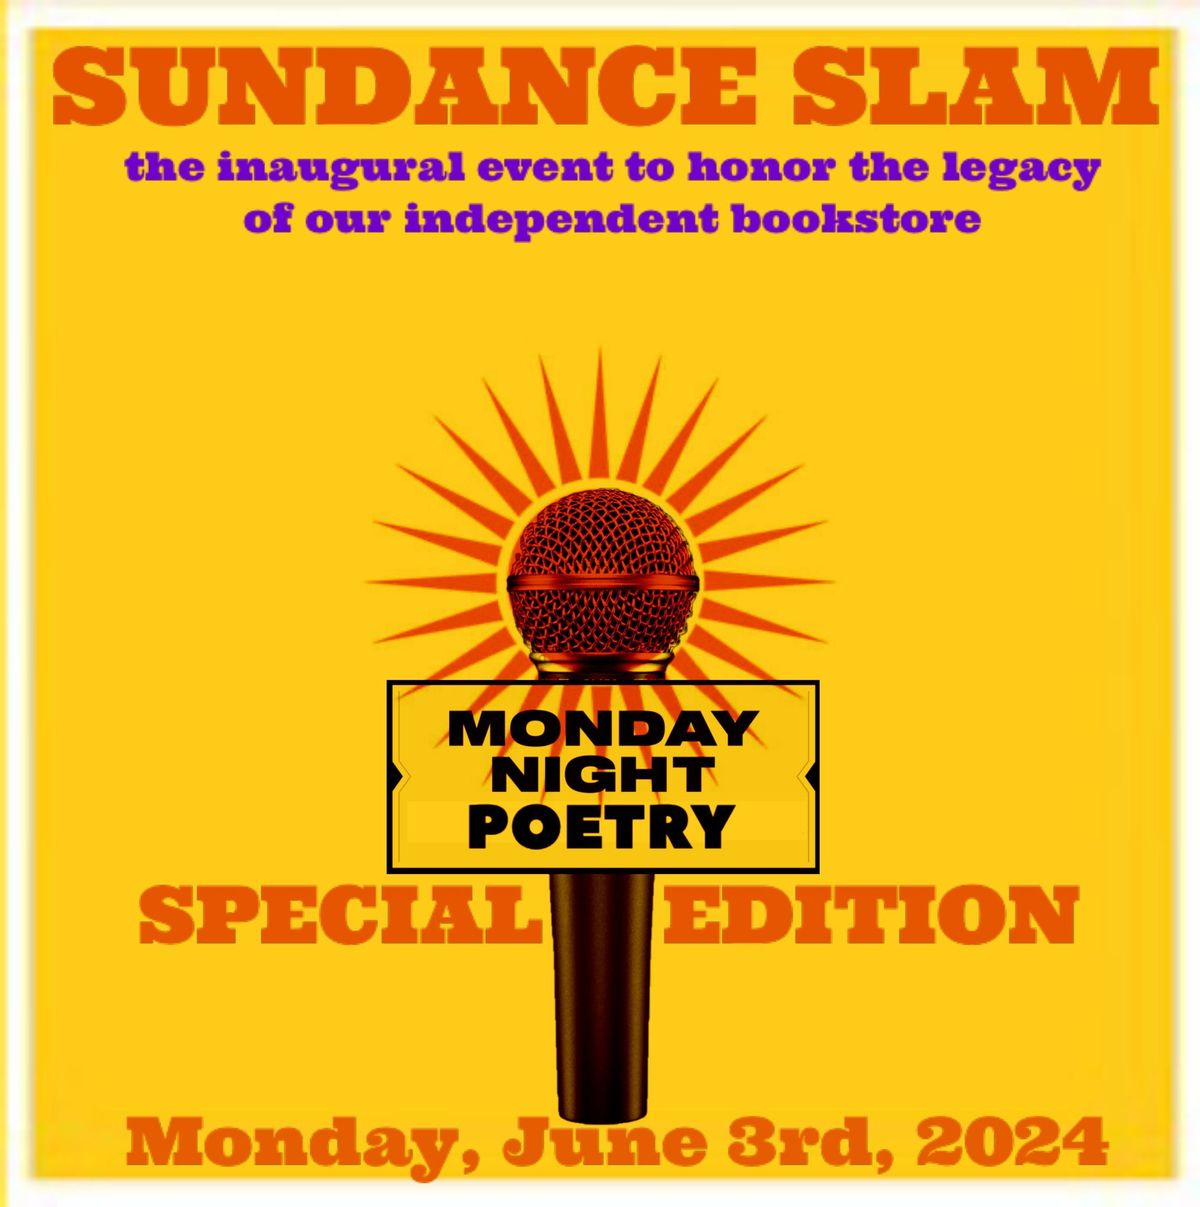 MONDAY NIGHT POETRY \u2014 SPECIAL EDITION: INAUGURAL SUNDANCE SLAM